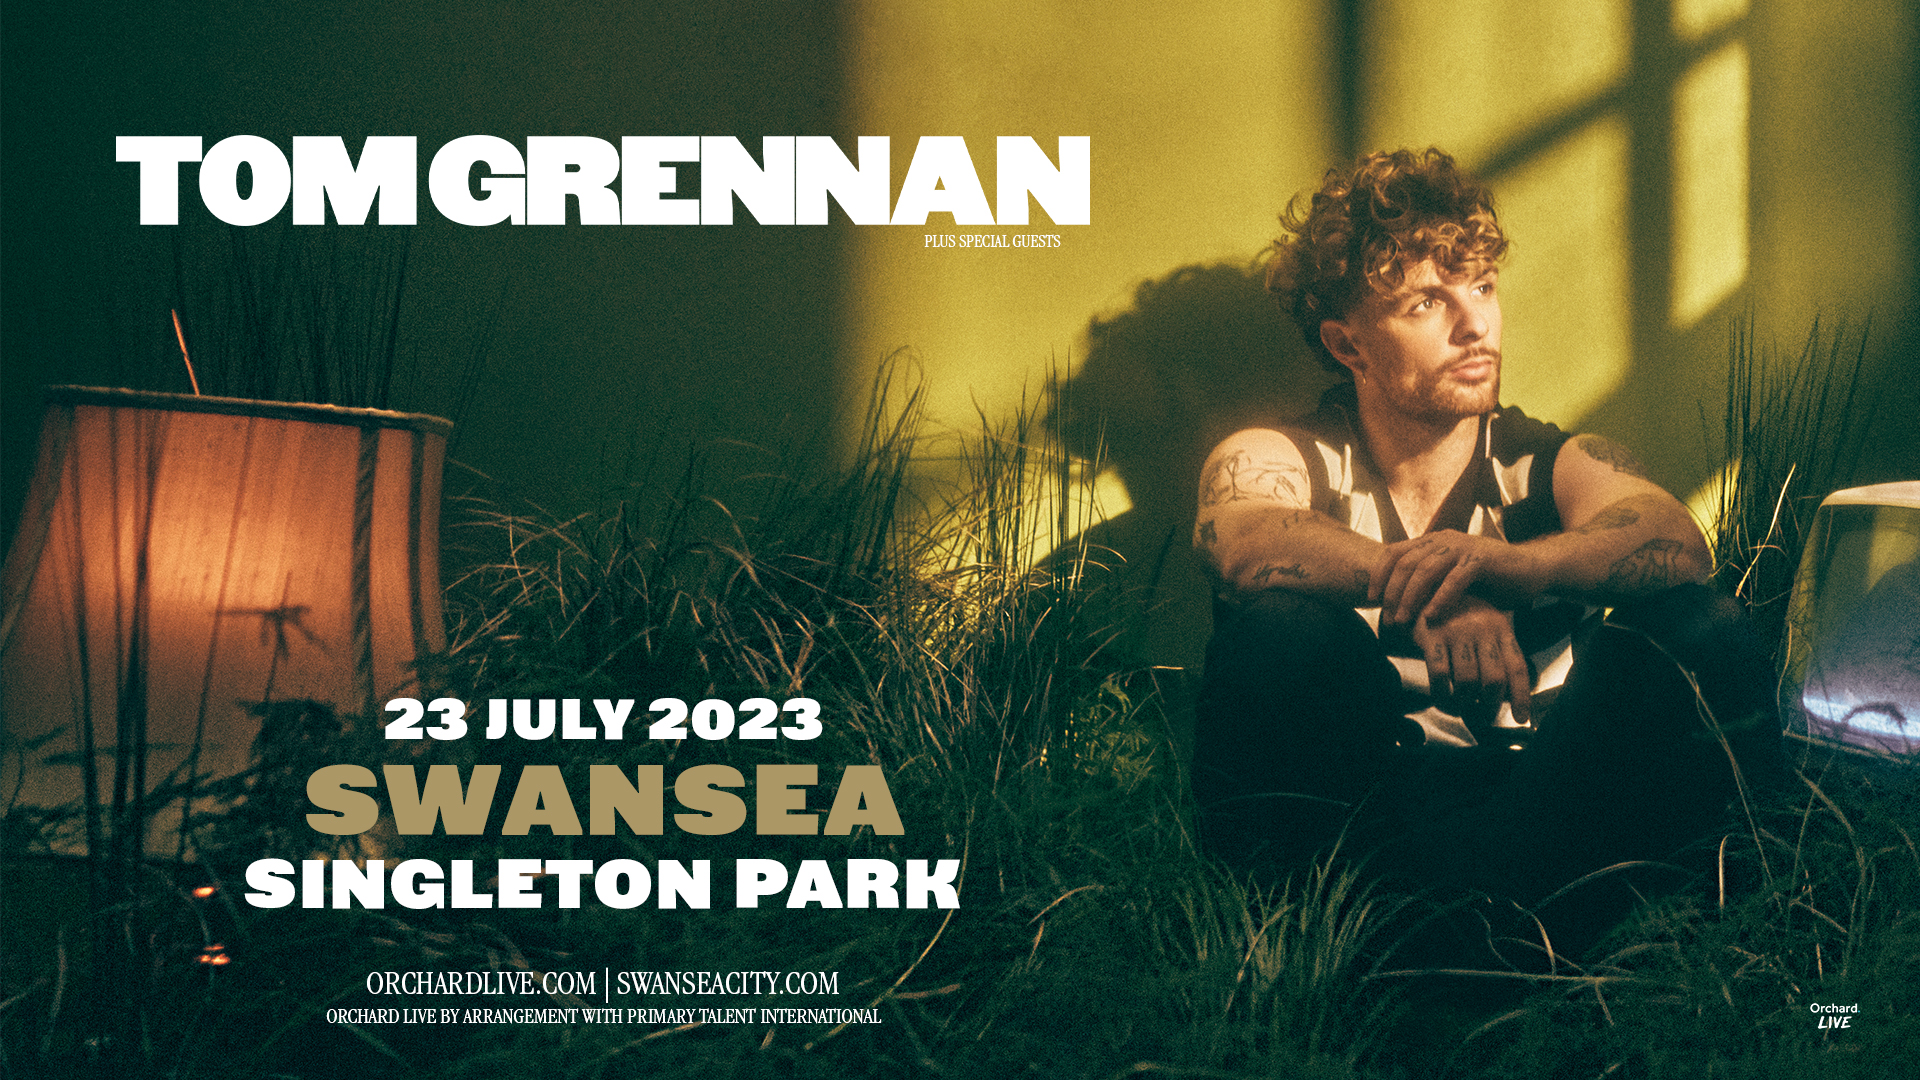 Tom Grennan to play at Singleton Park in July 2023